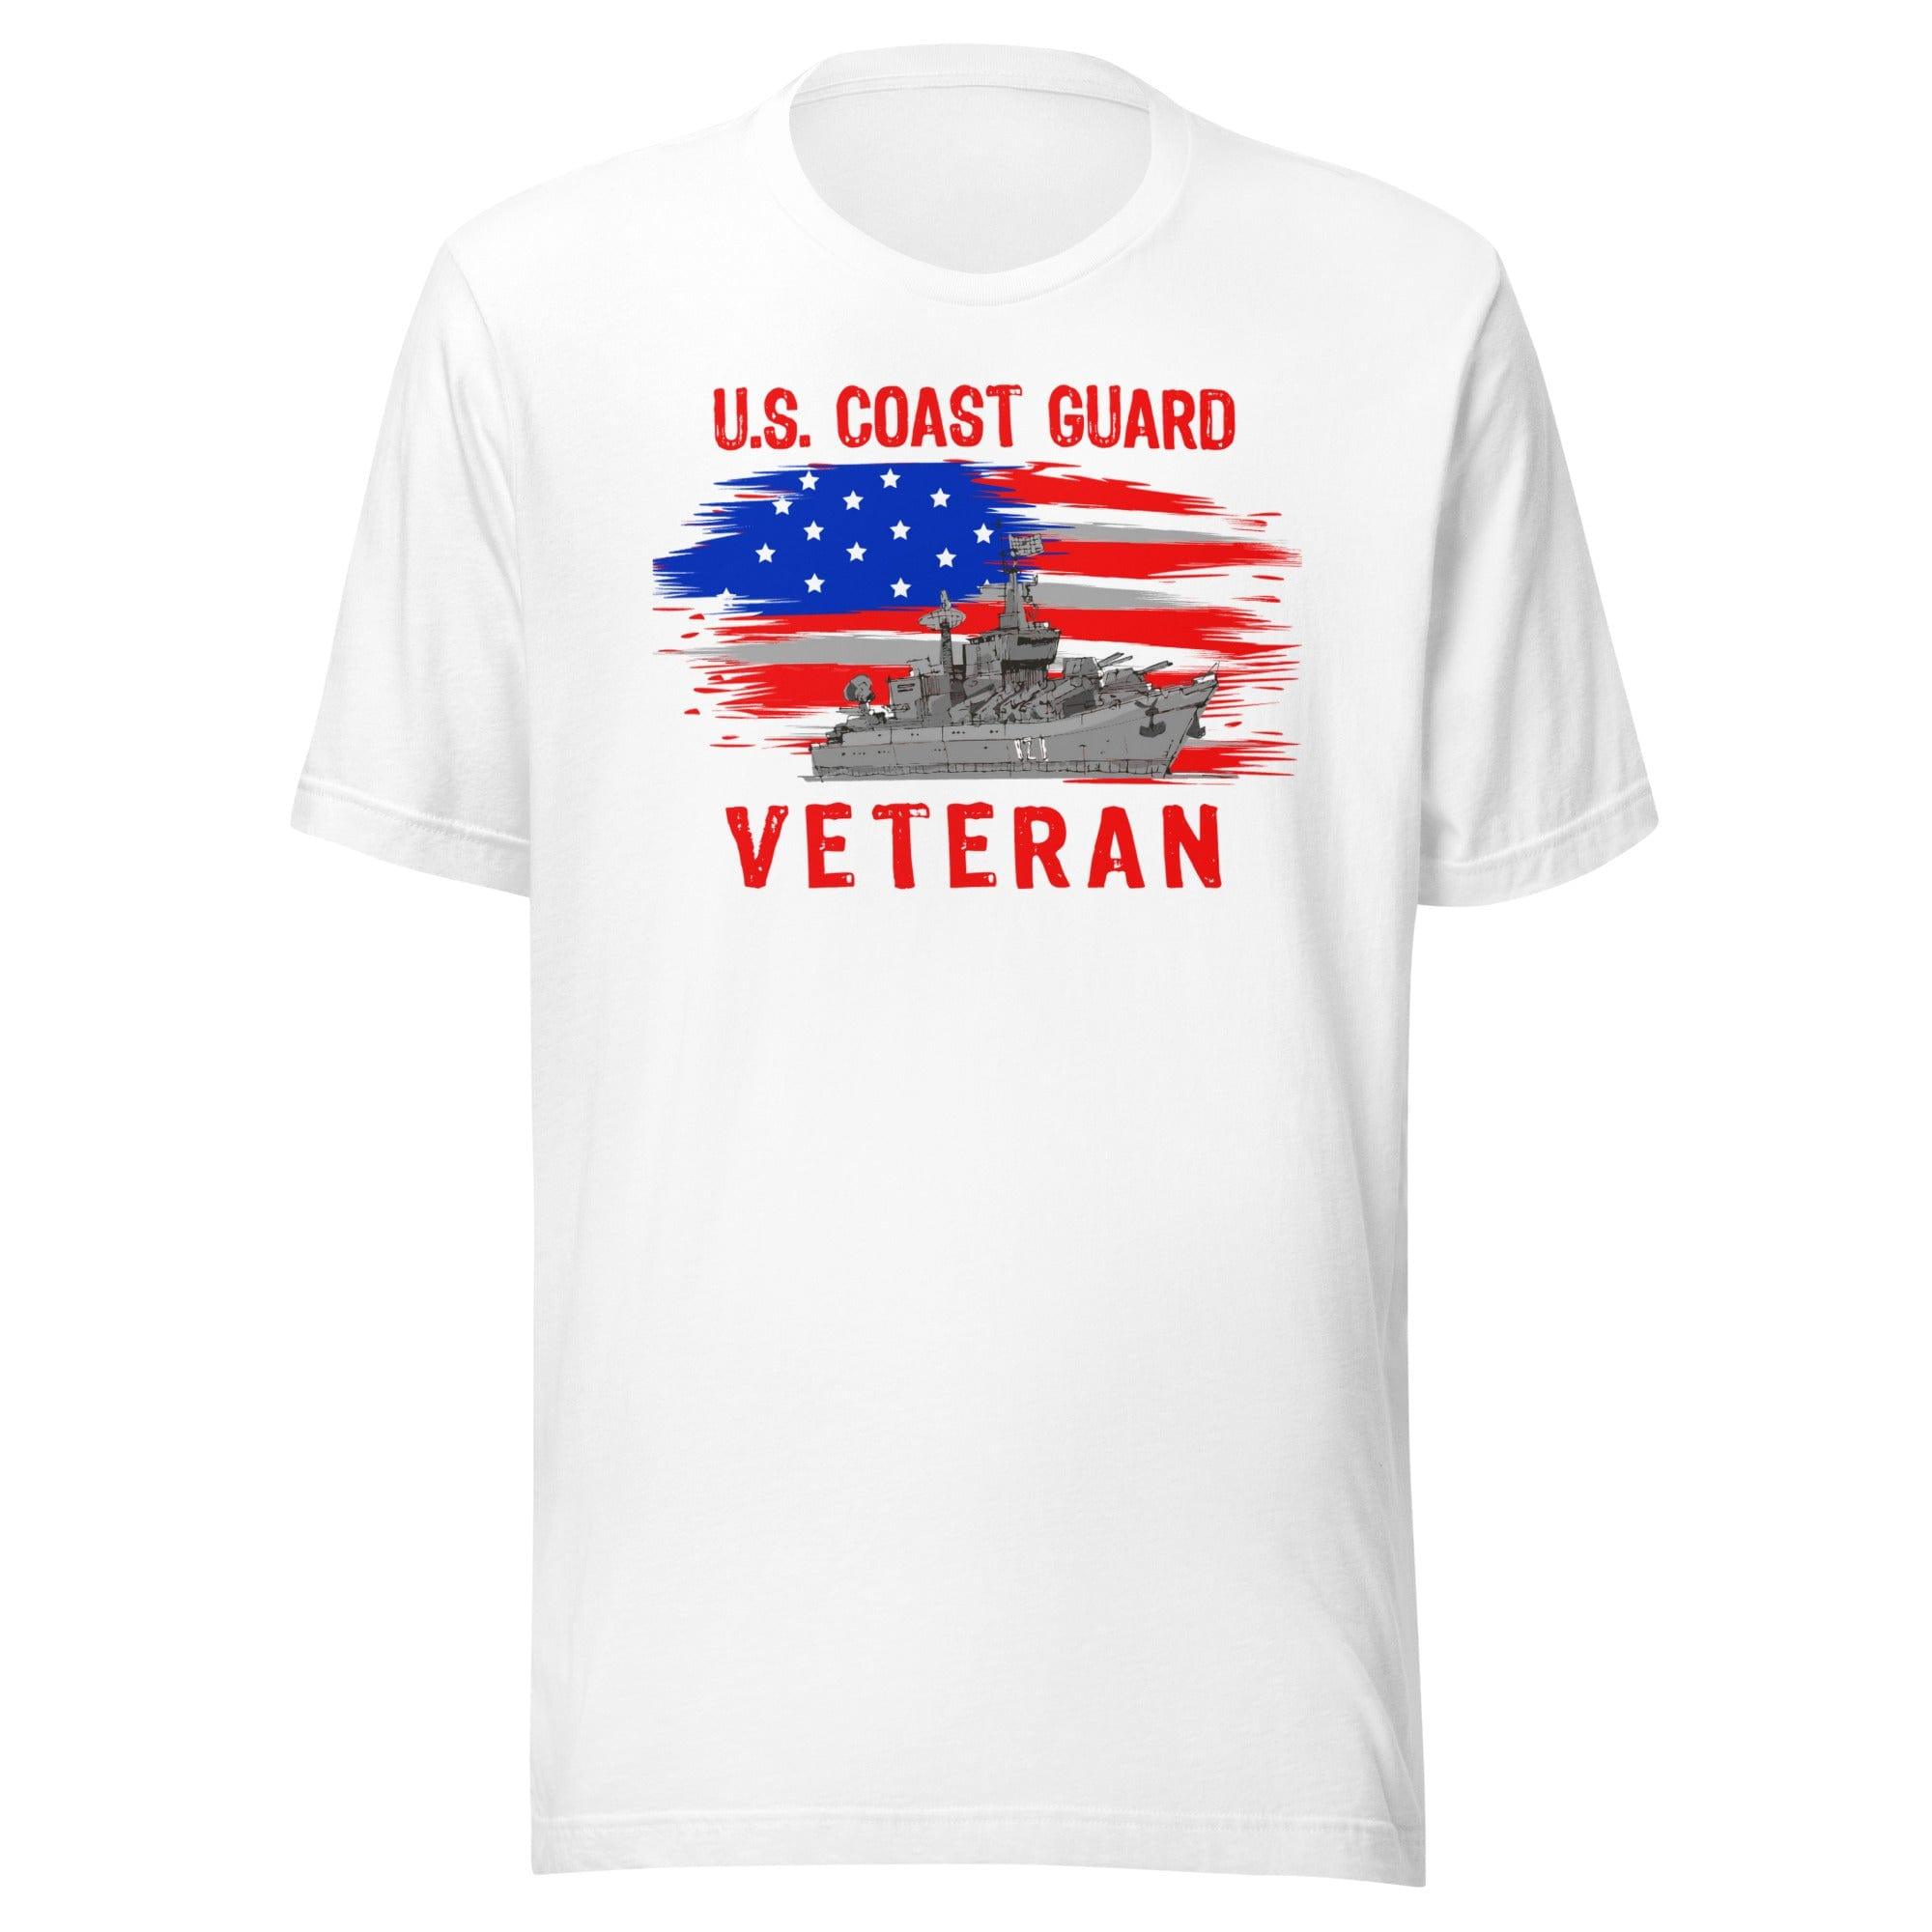 Veterans T-shirt US Coast Guard Short Sleeve Unisex Top - TopKoalaTee